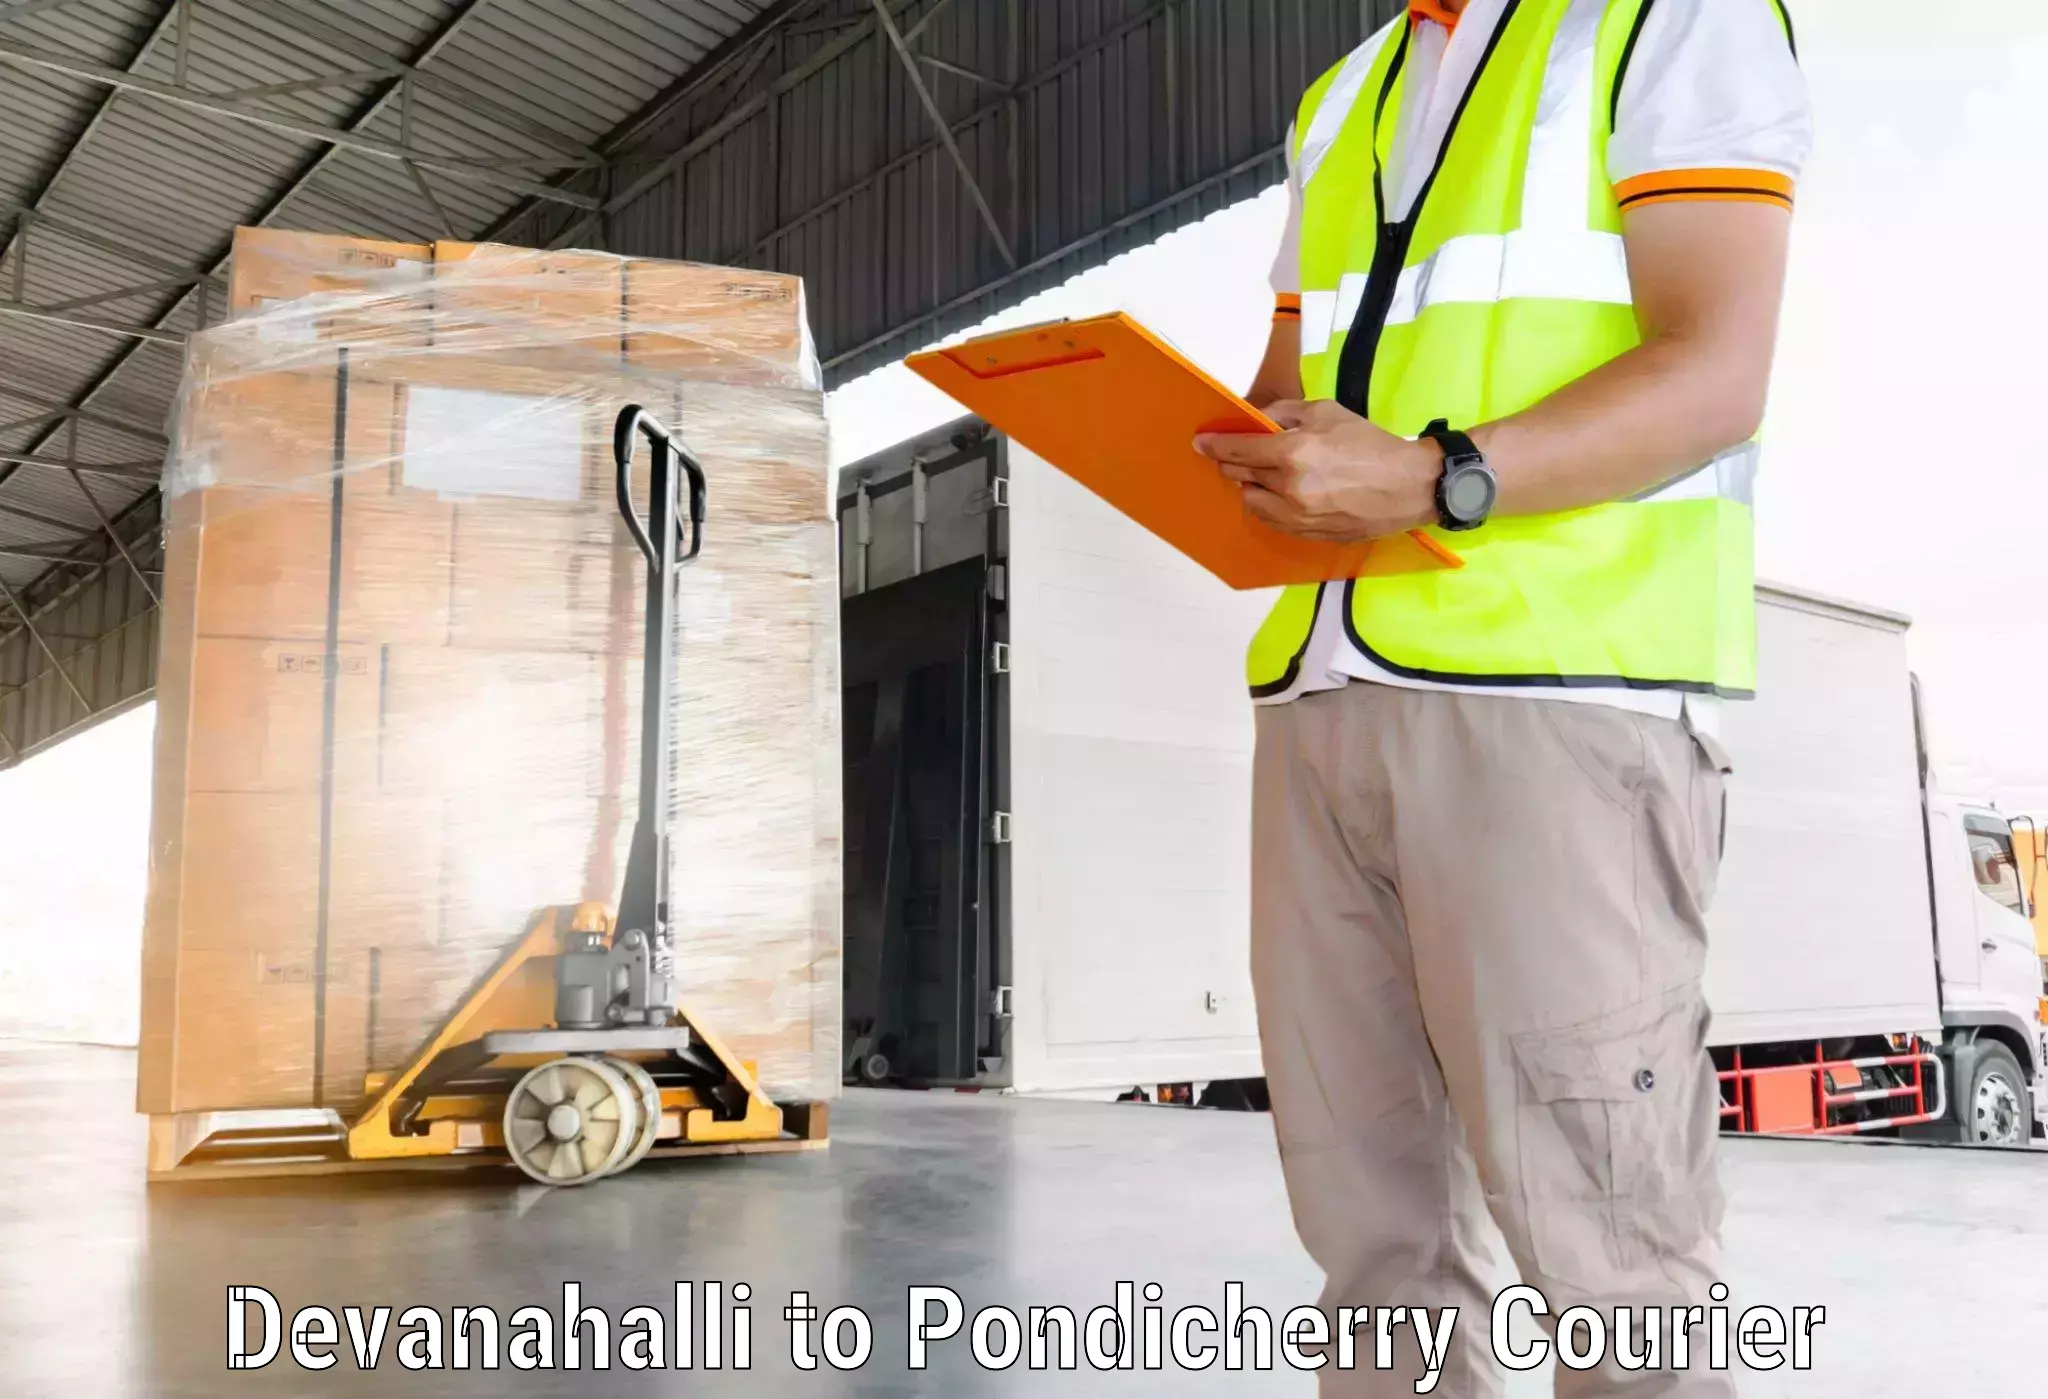 Express logistics providers Devanahalli to Pondicherry